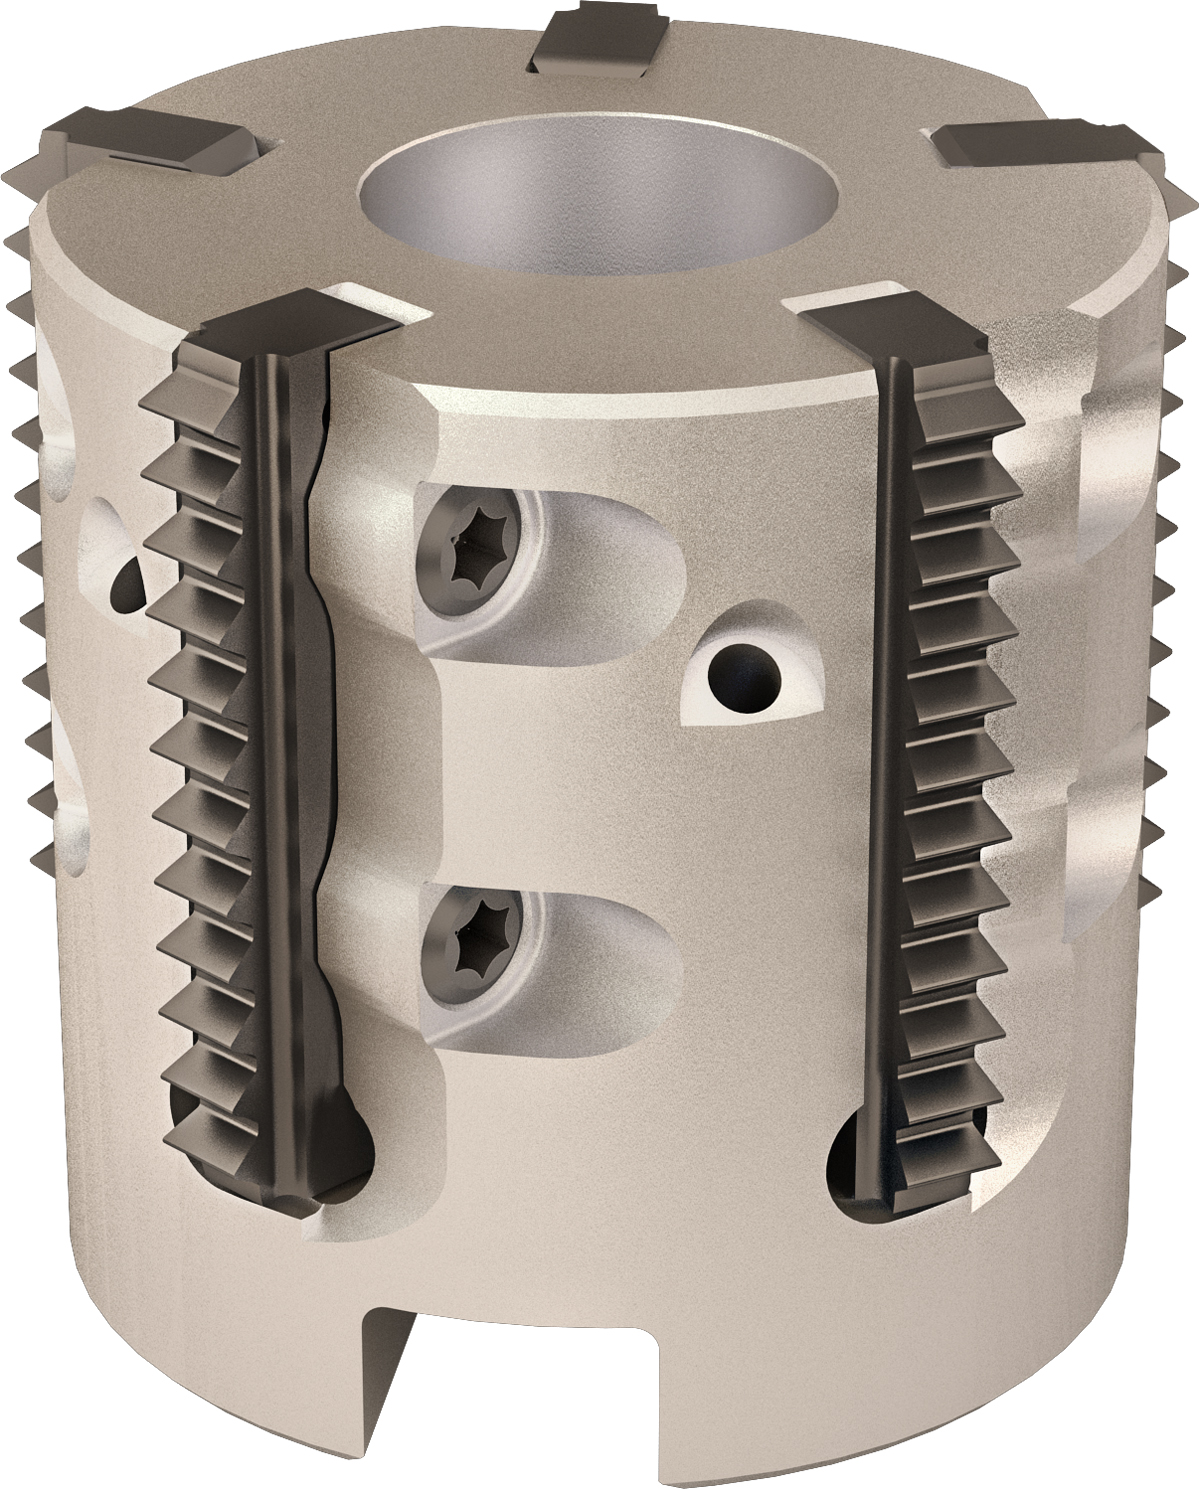 Thread Milling Holders Multi 36.4 Mill Flute (mm) Insert Shank Overhang (mm) Diameter for Tool Shell Compatibility R25 16 (mm) Cutting Diameter 200